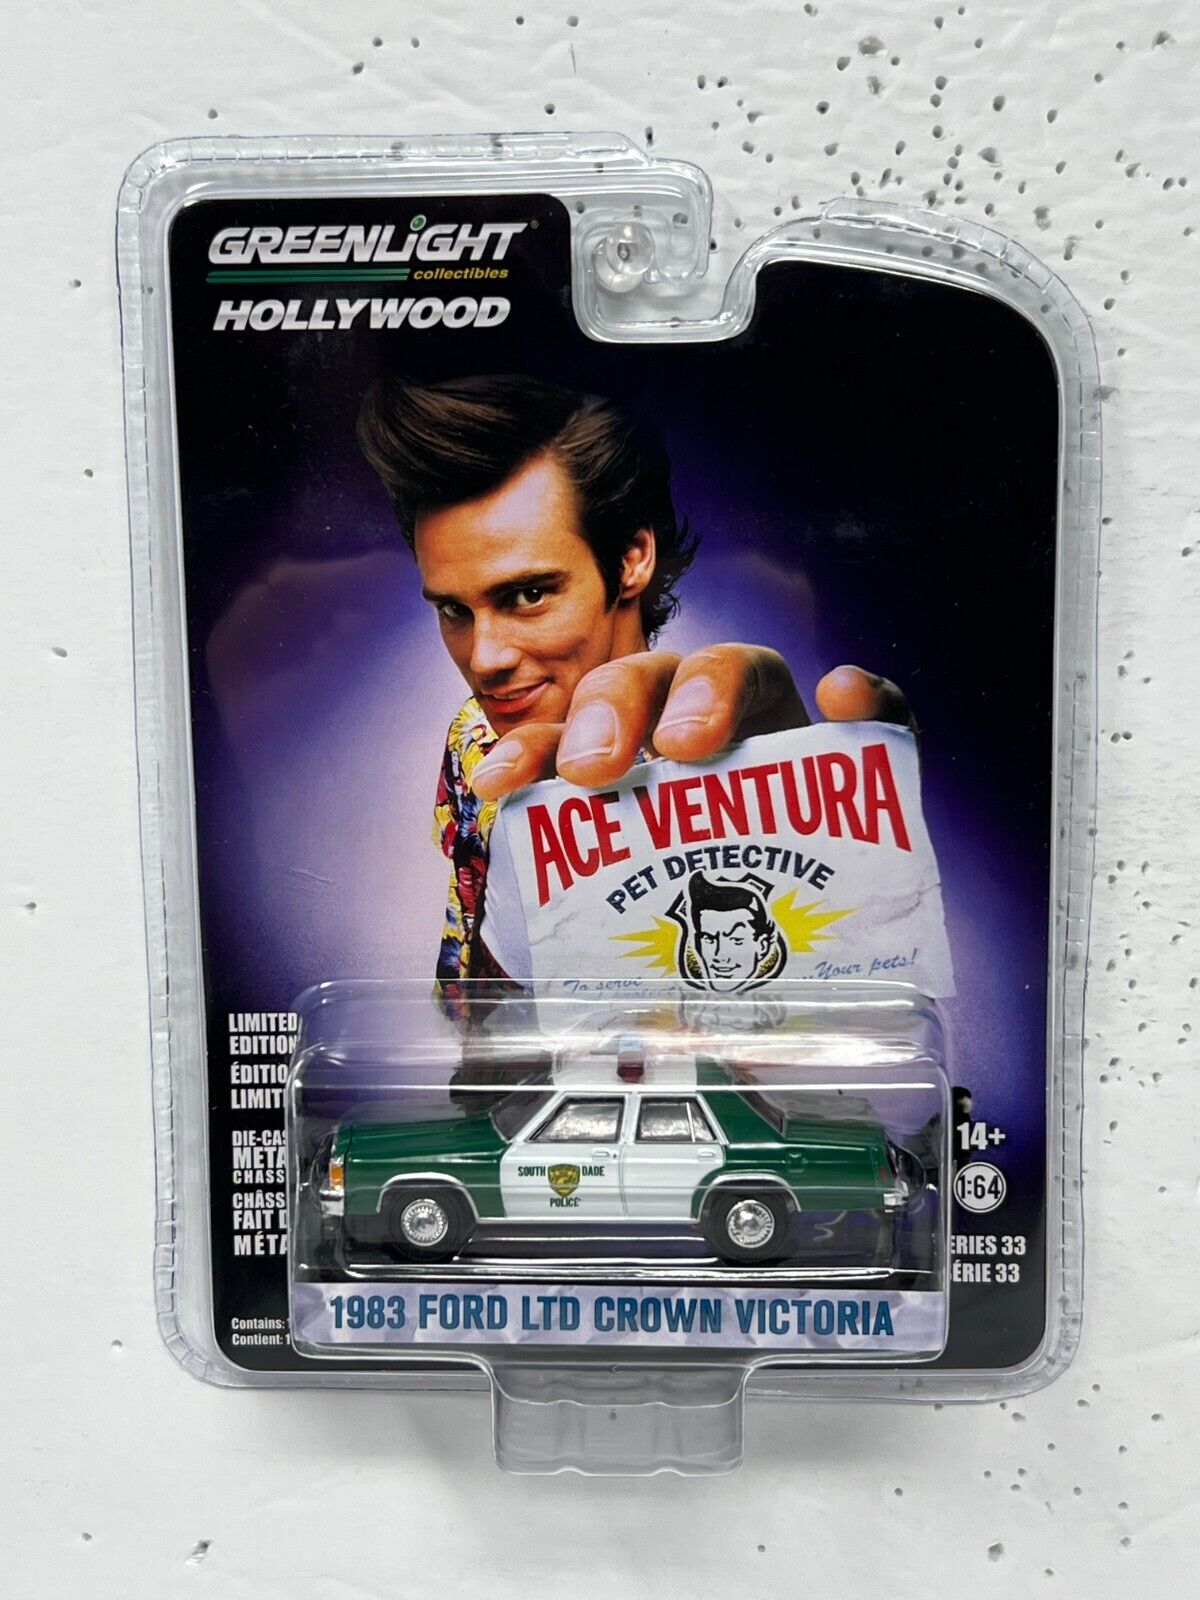 Greenlight Hollywood Ace Ventura 1983 Ford LTD Crown Victoria 1:64 Diecast